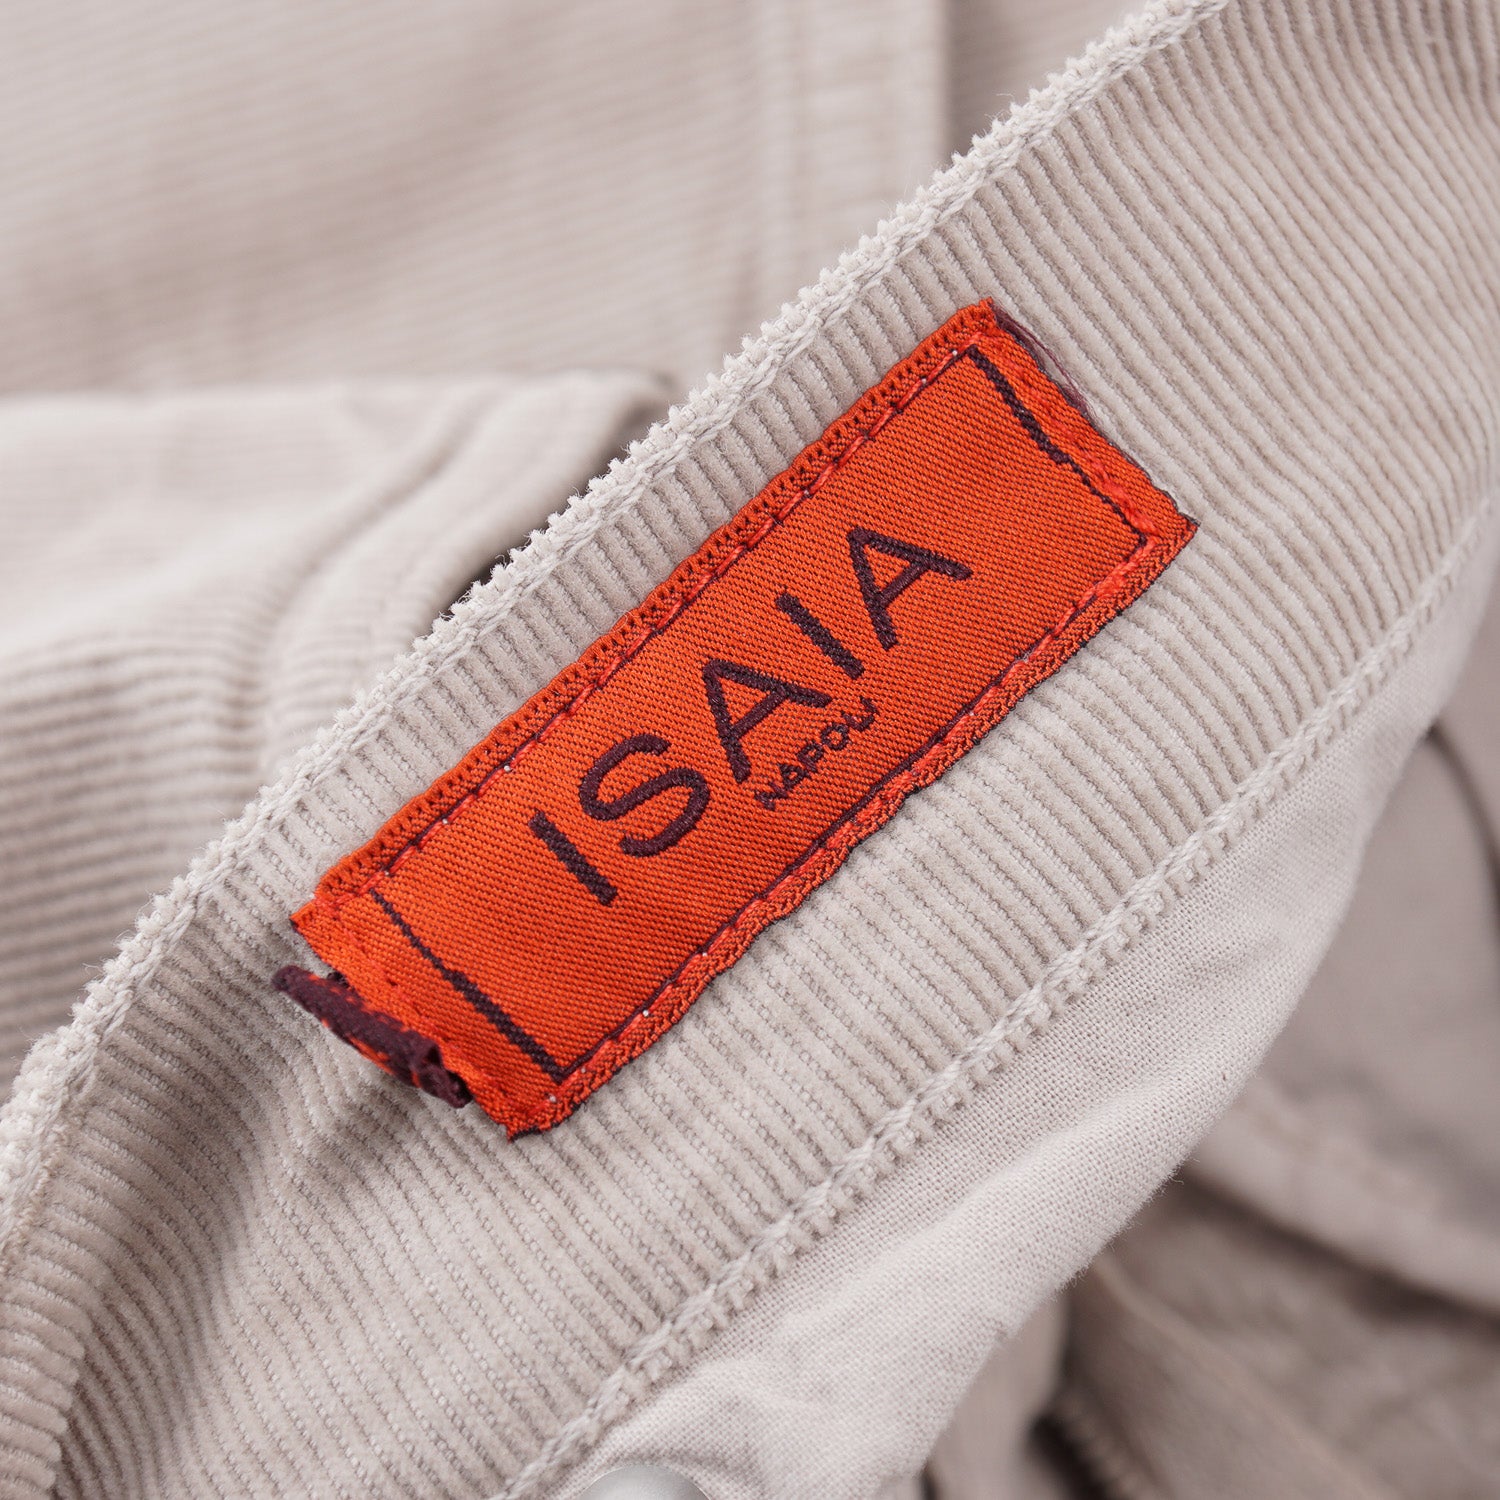 Isaia Five-Pocket Corduroy Pants - Top Shelf Apparel